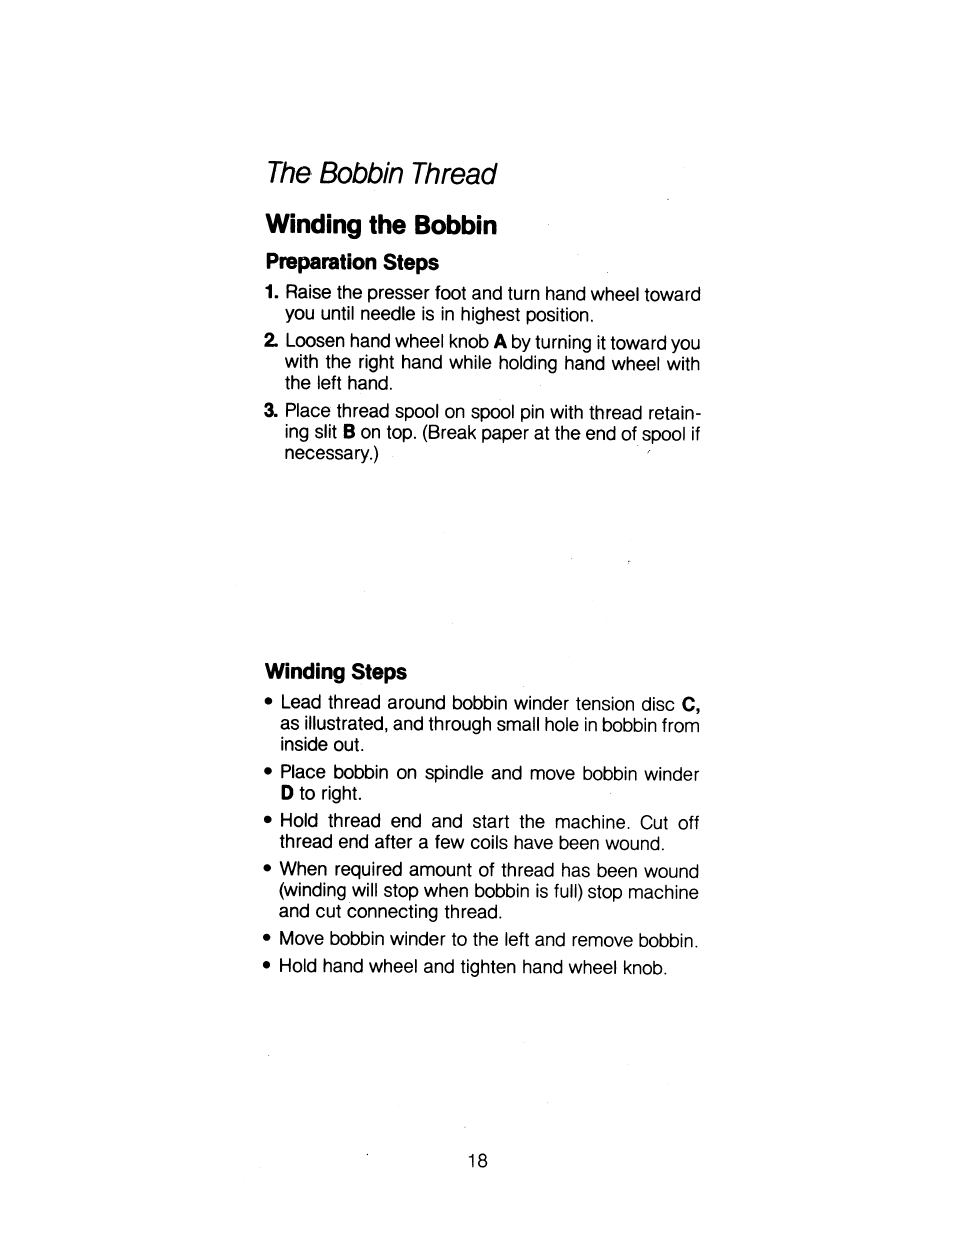 Winding the bobbin, Preparation steps, Winding steps | The bobbin thread | SINGER 1263 User Manual | Page 19 / 73